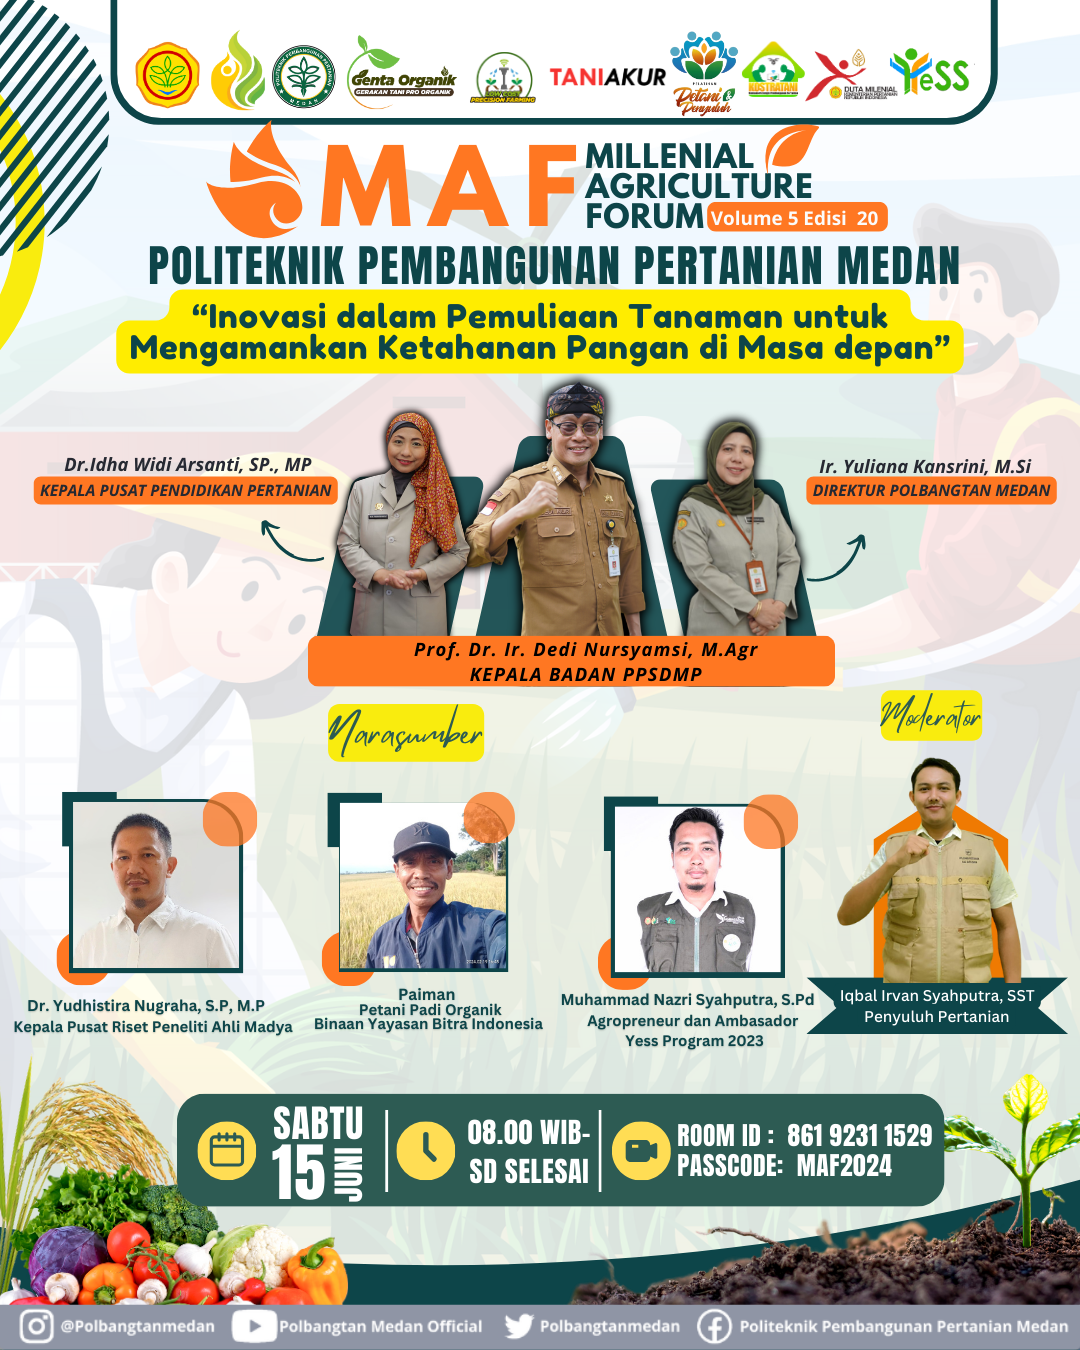 Millenial Agriculture Forum (MAF) Polbangtan Medan Volume 5 Edisi 20 